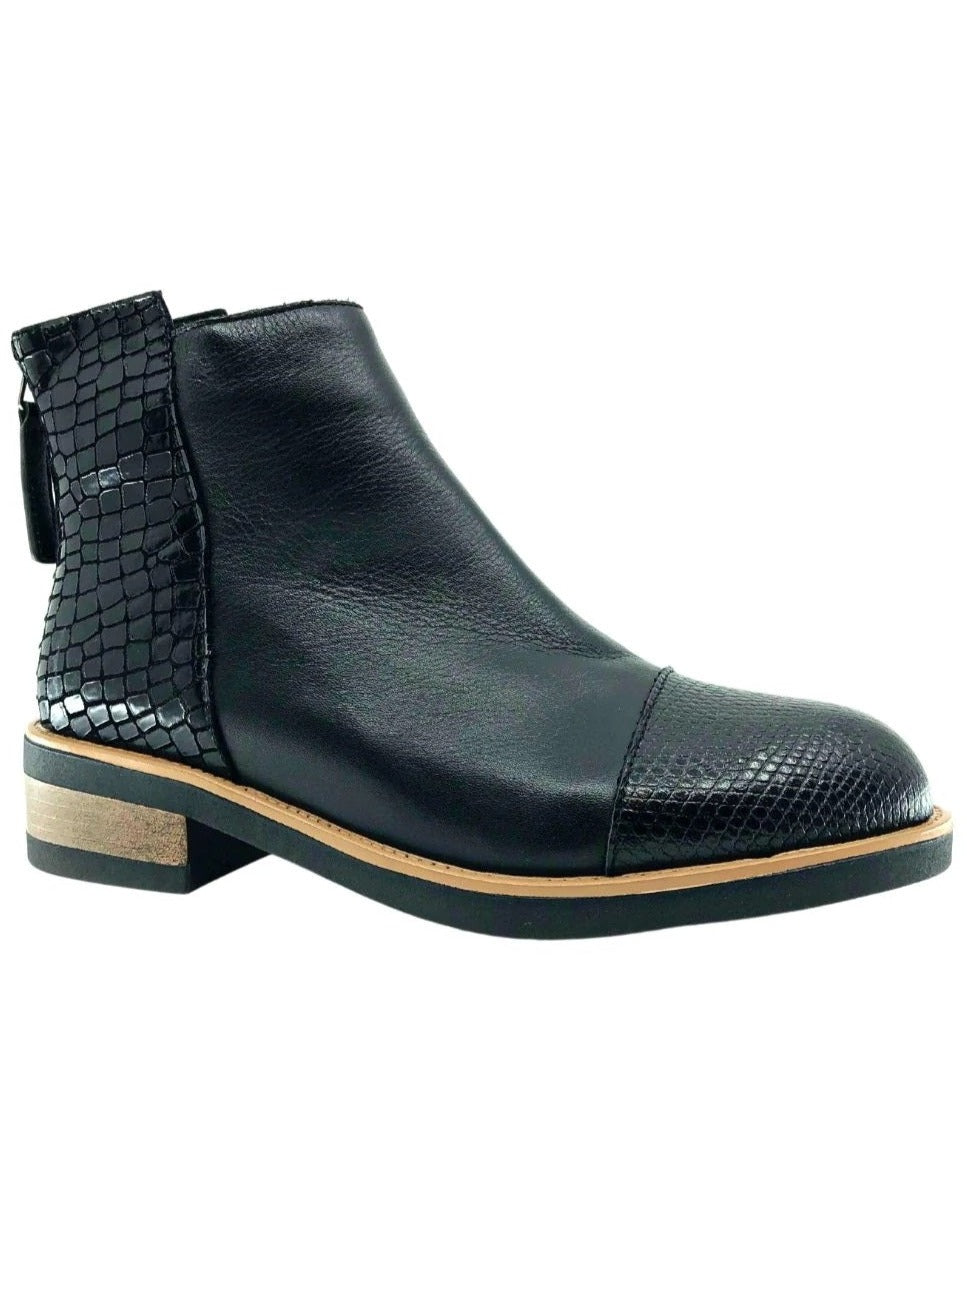 Bresley Duck Leather Boot - Black multi